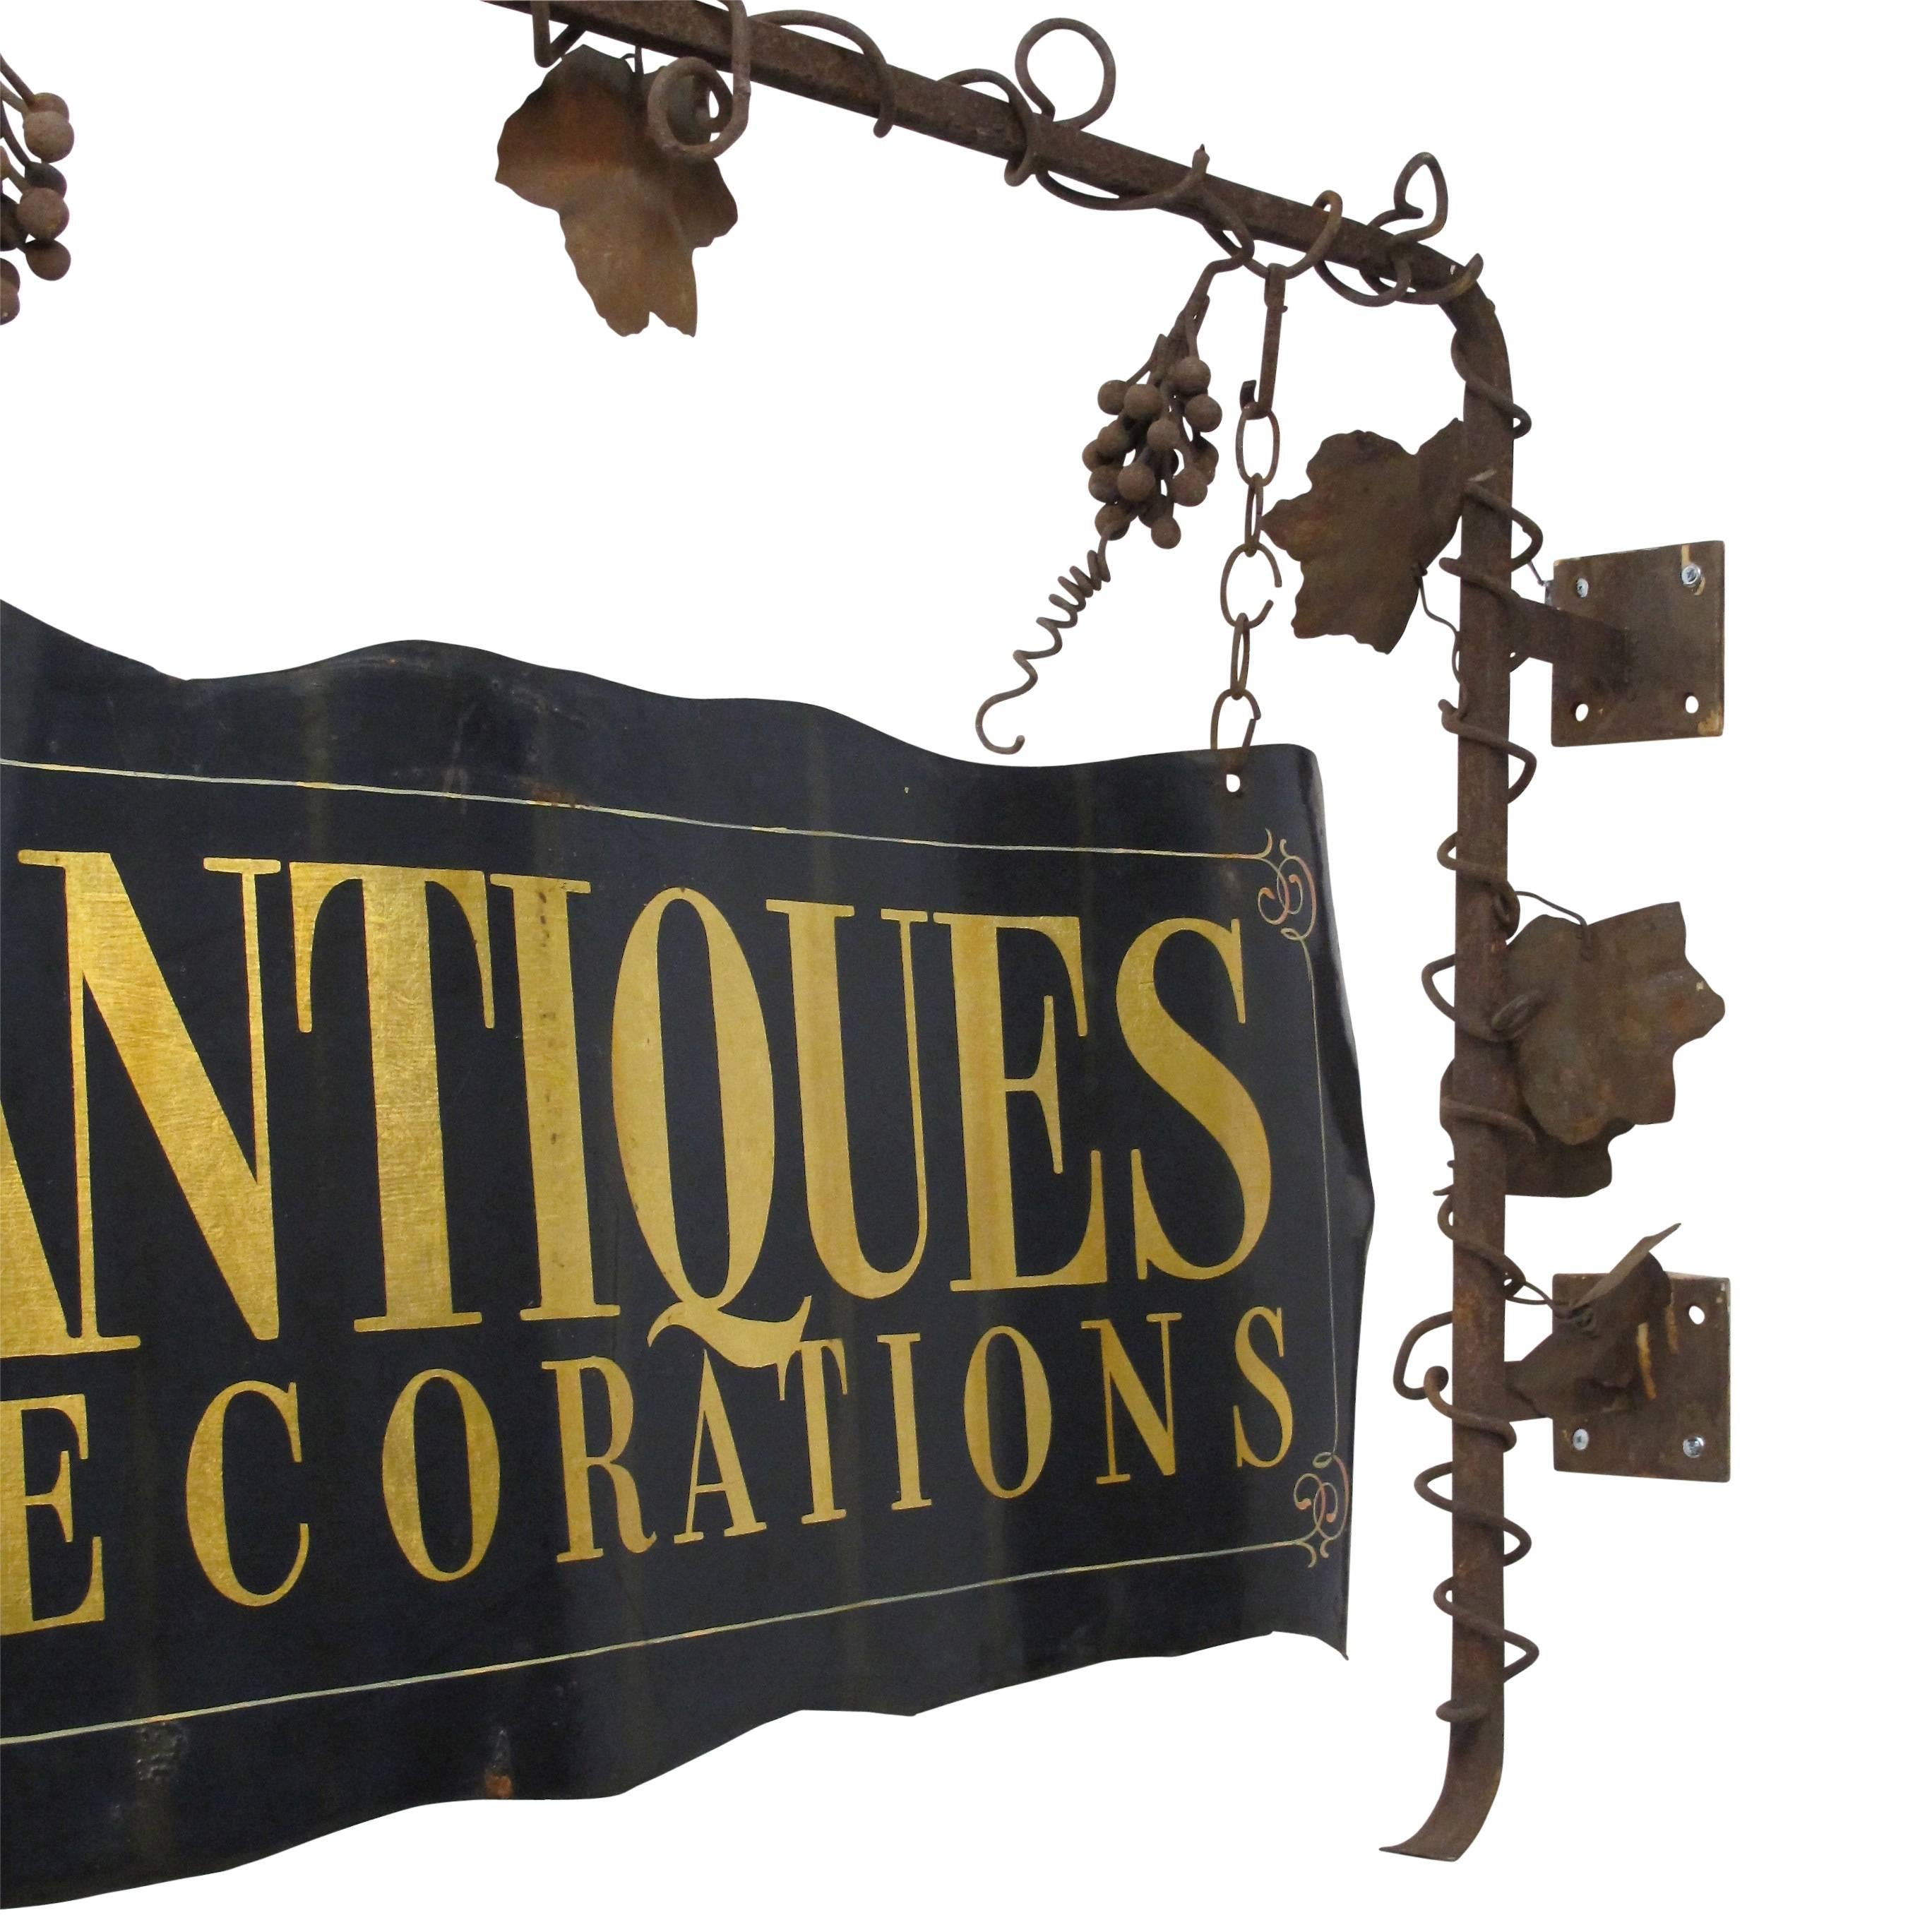 antiques sign